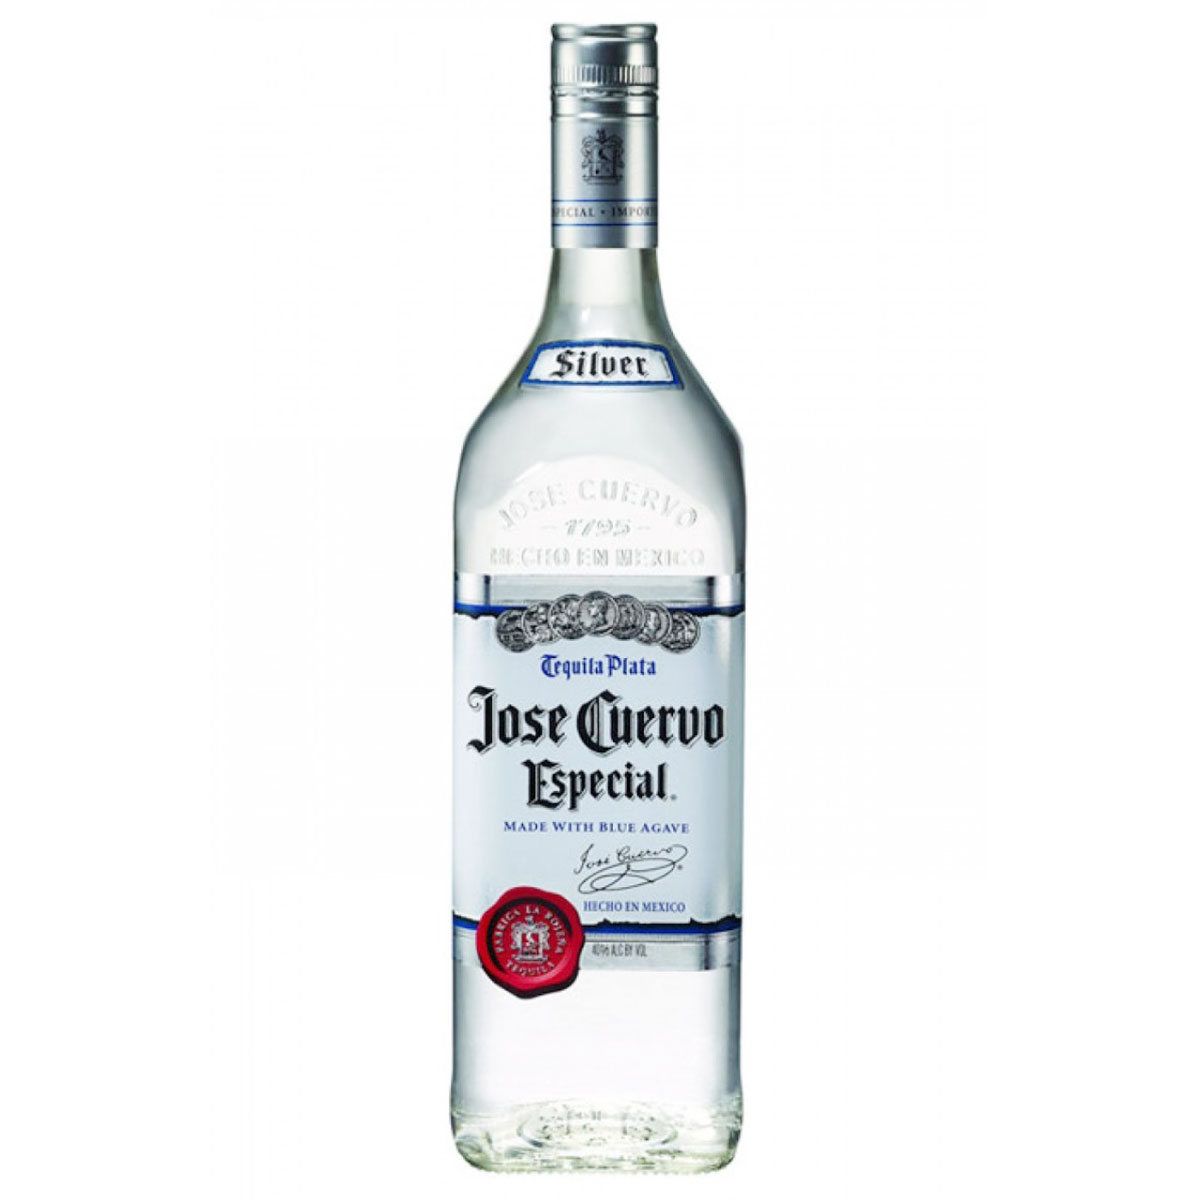 a bottle of jose cuervo silver classico blanco tequila